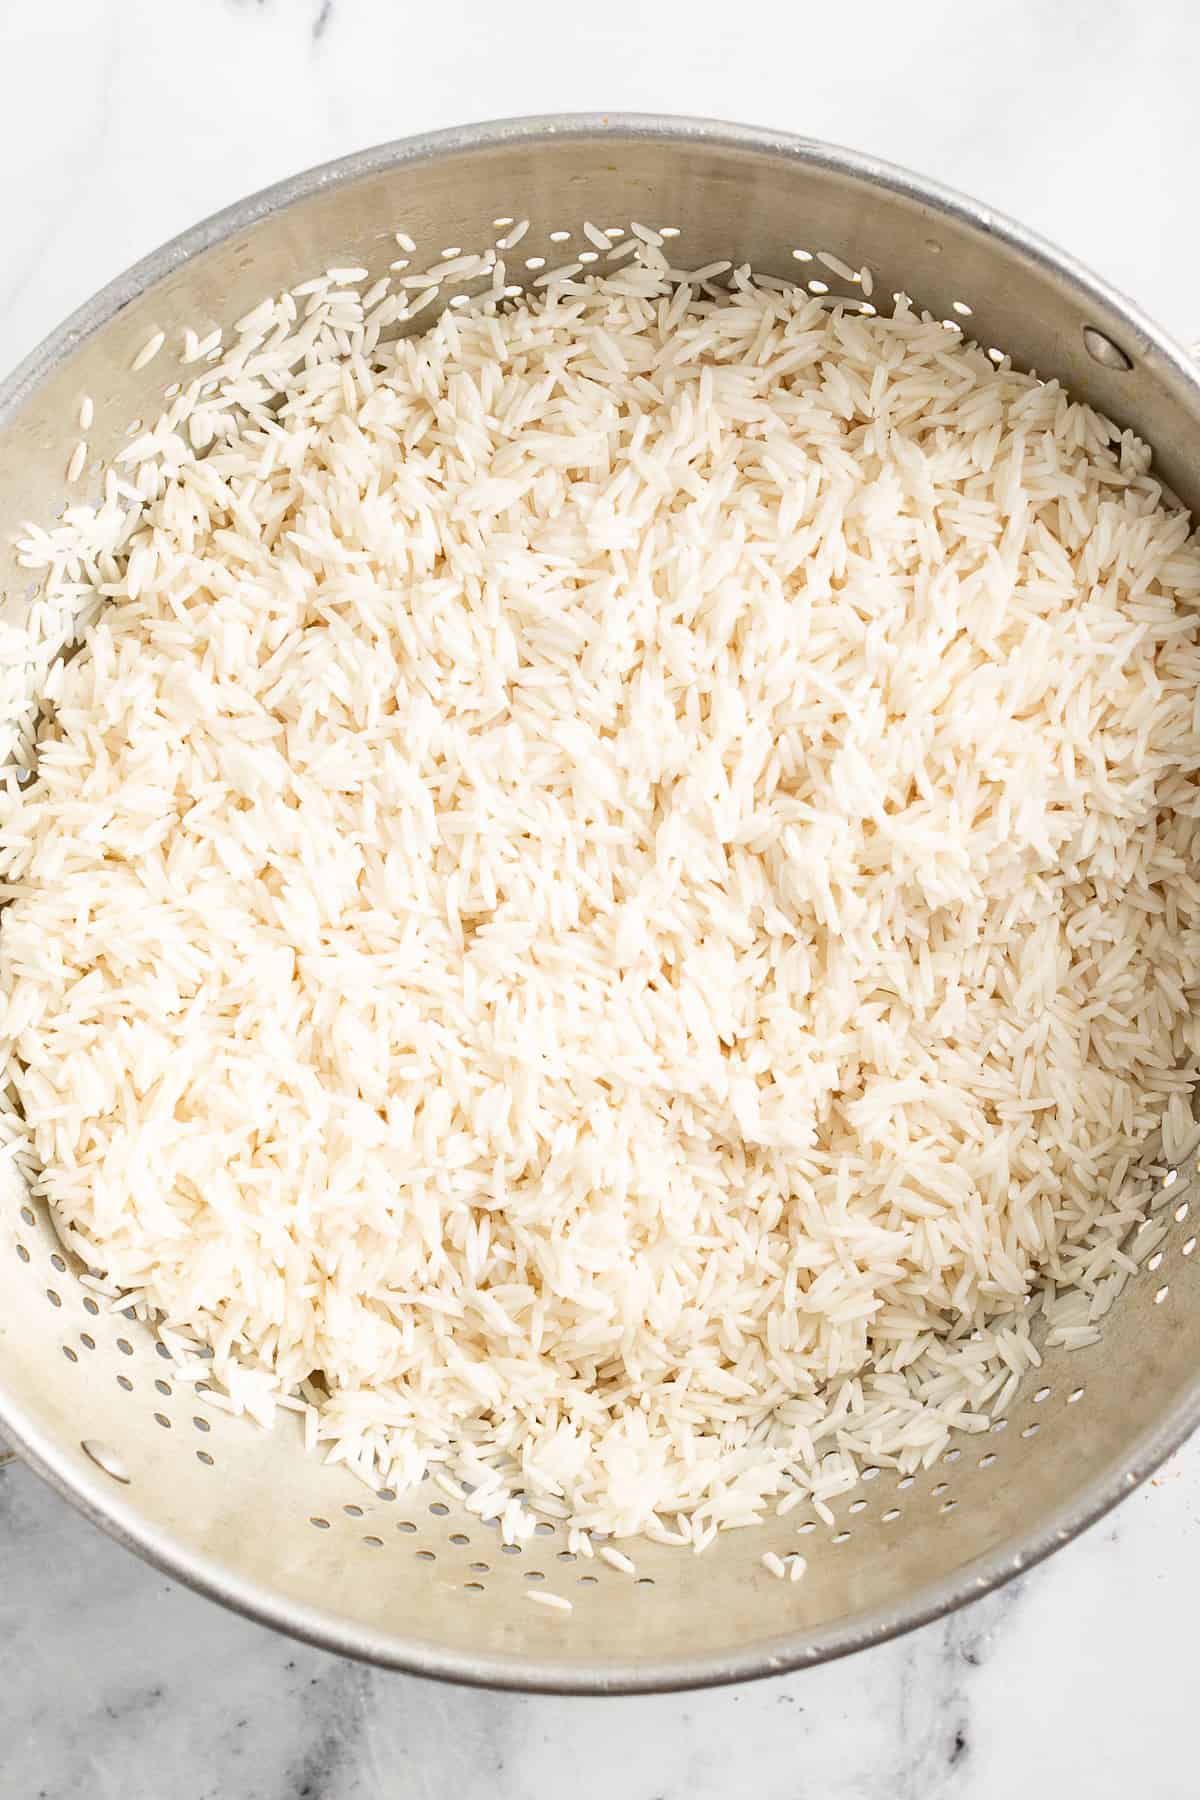 Washing the rice.